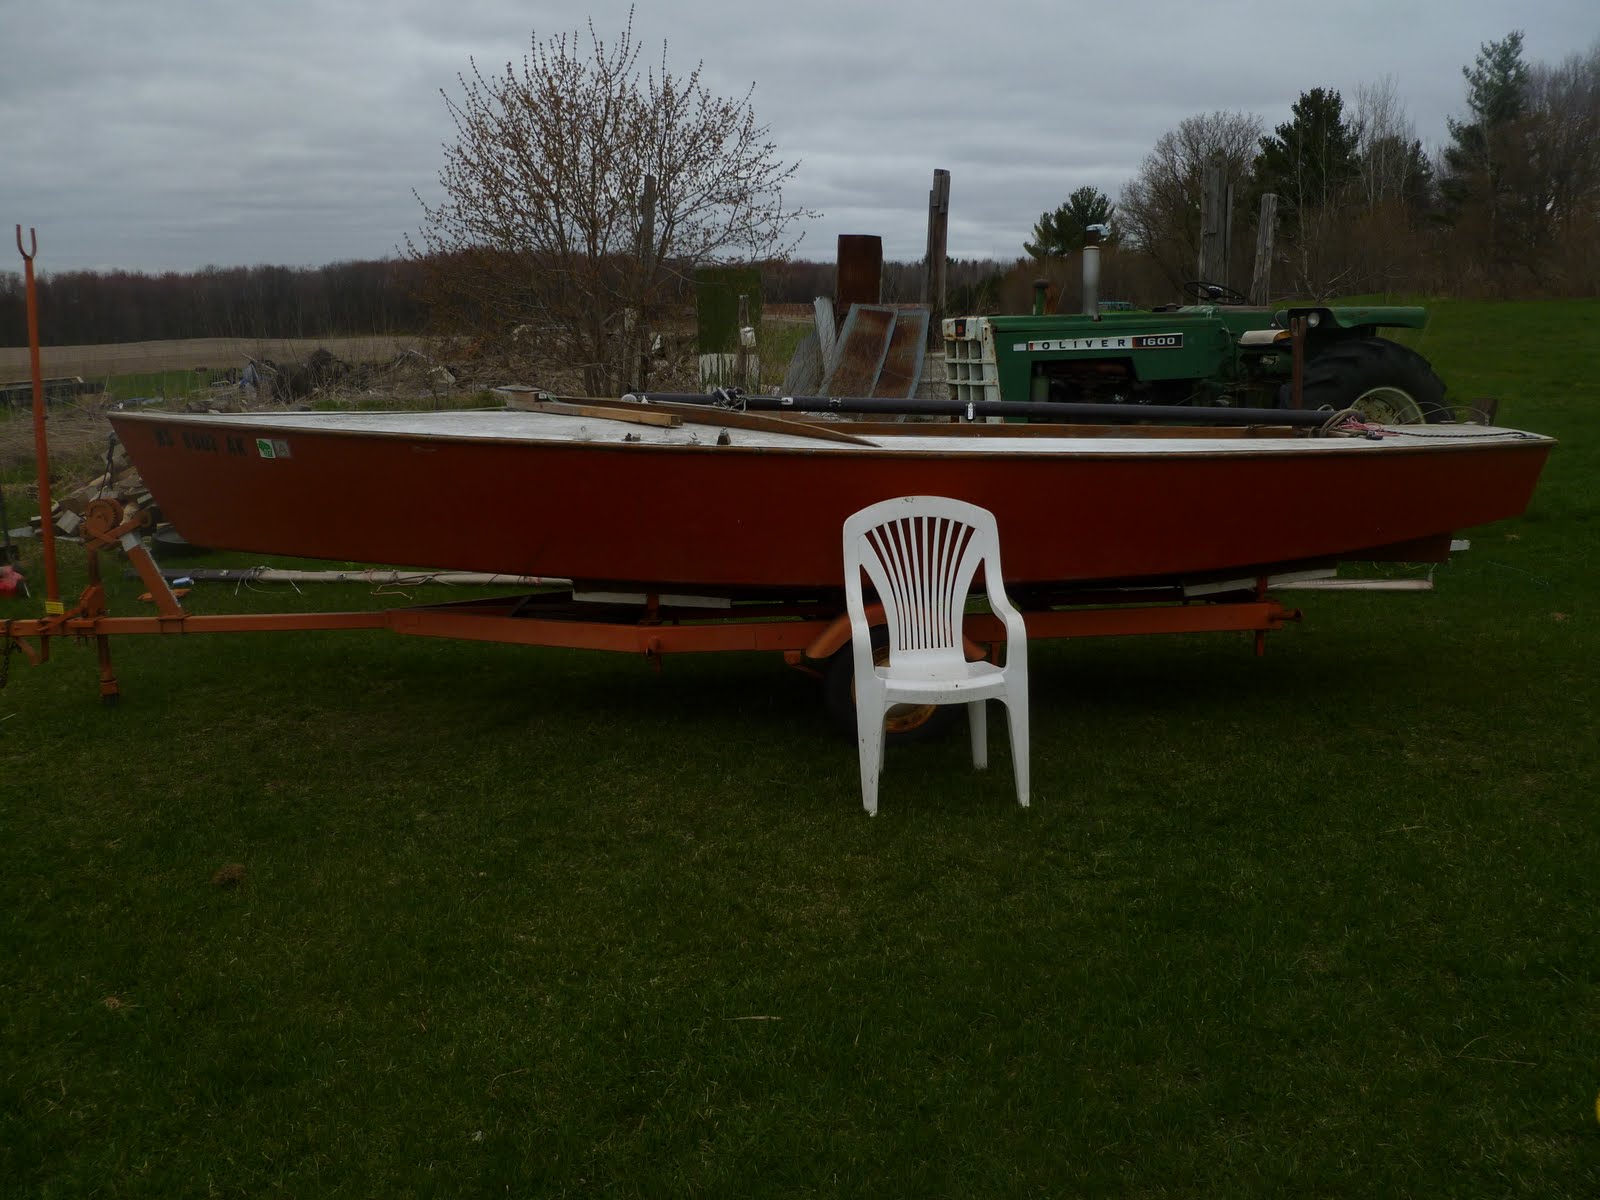  42: Restore Project: ~1968 Lightning 19' Centerboard Sloop, a sailboat